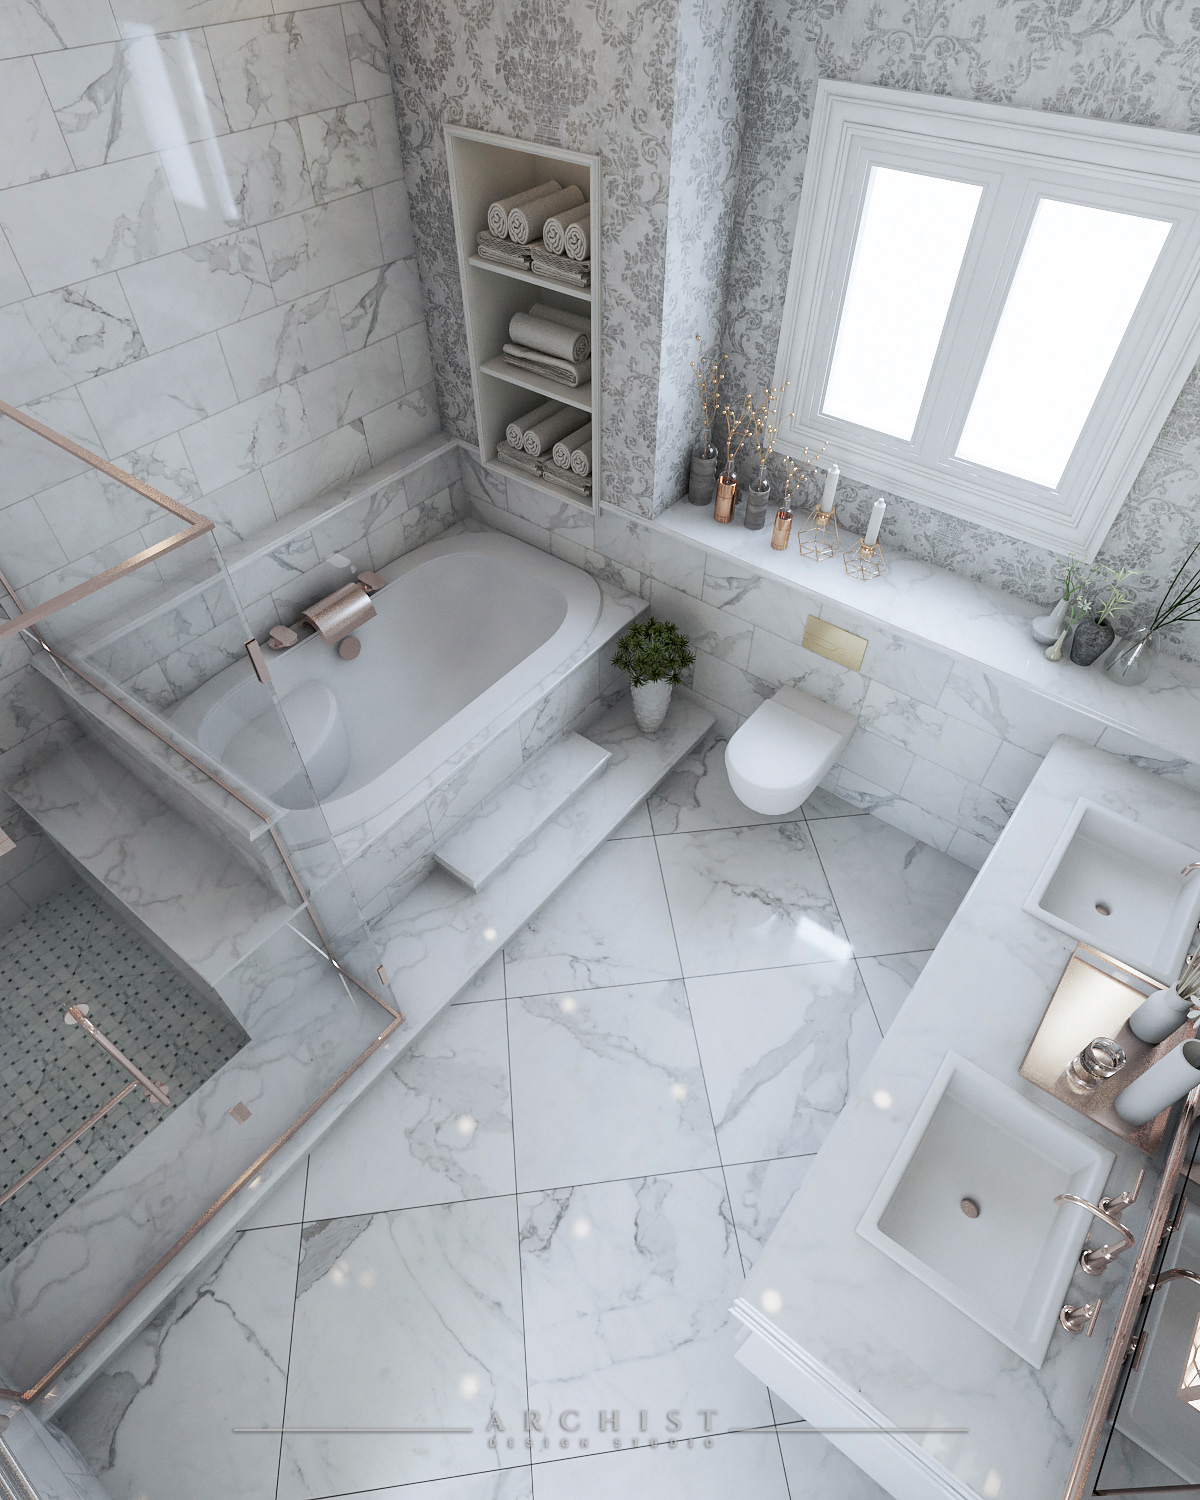 archist toilet luxury brand elegant bathroom White Marble grey wallpaper